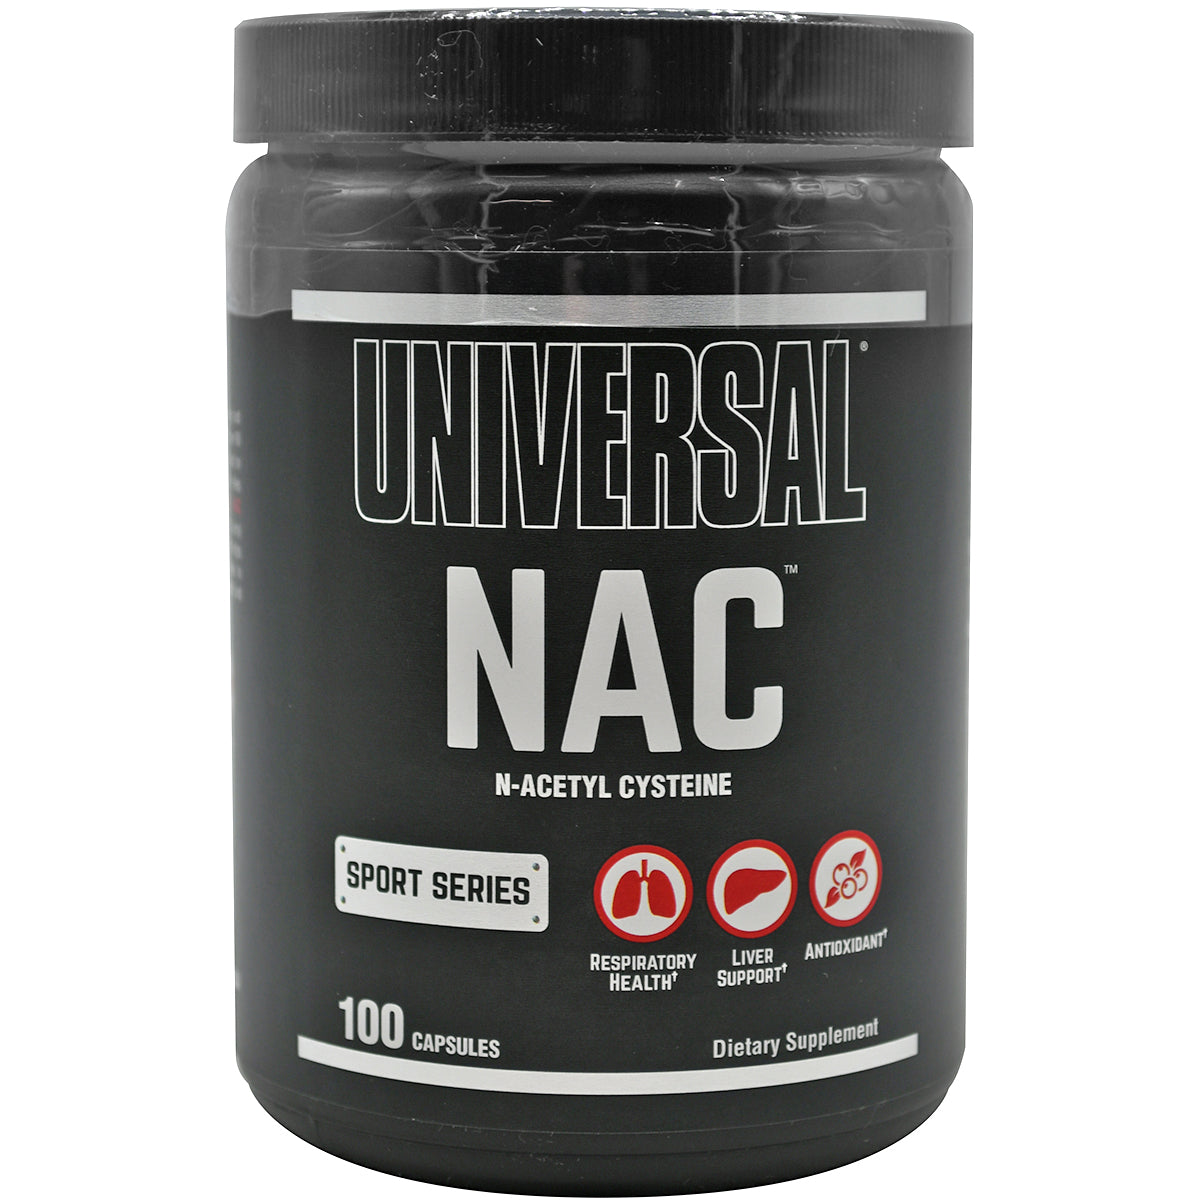 Universal Nutrition NAC (N-Acetyl Cysteine) Dietary Supplement - 100 Capsules Universal Nutrition